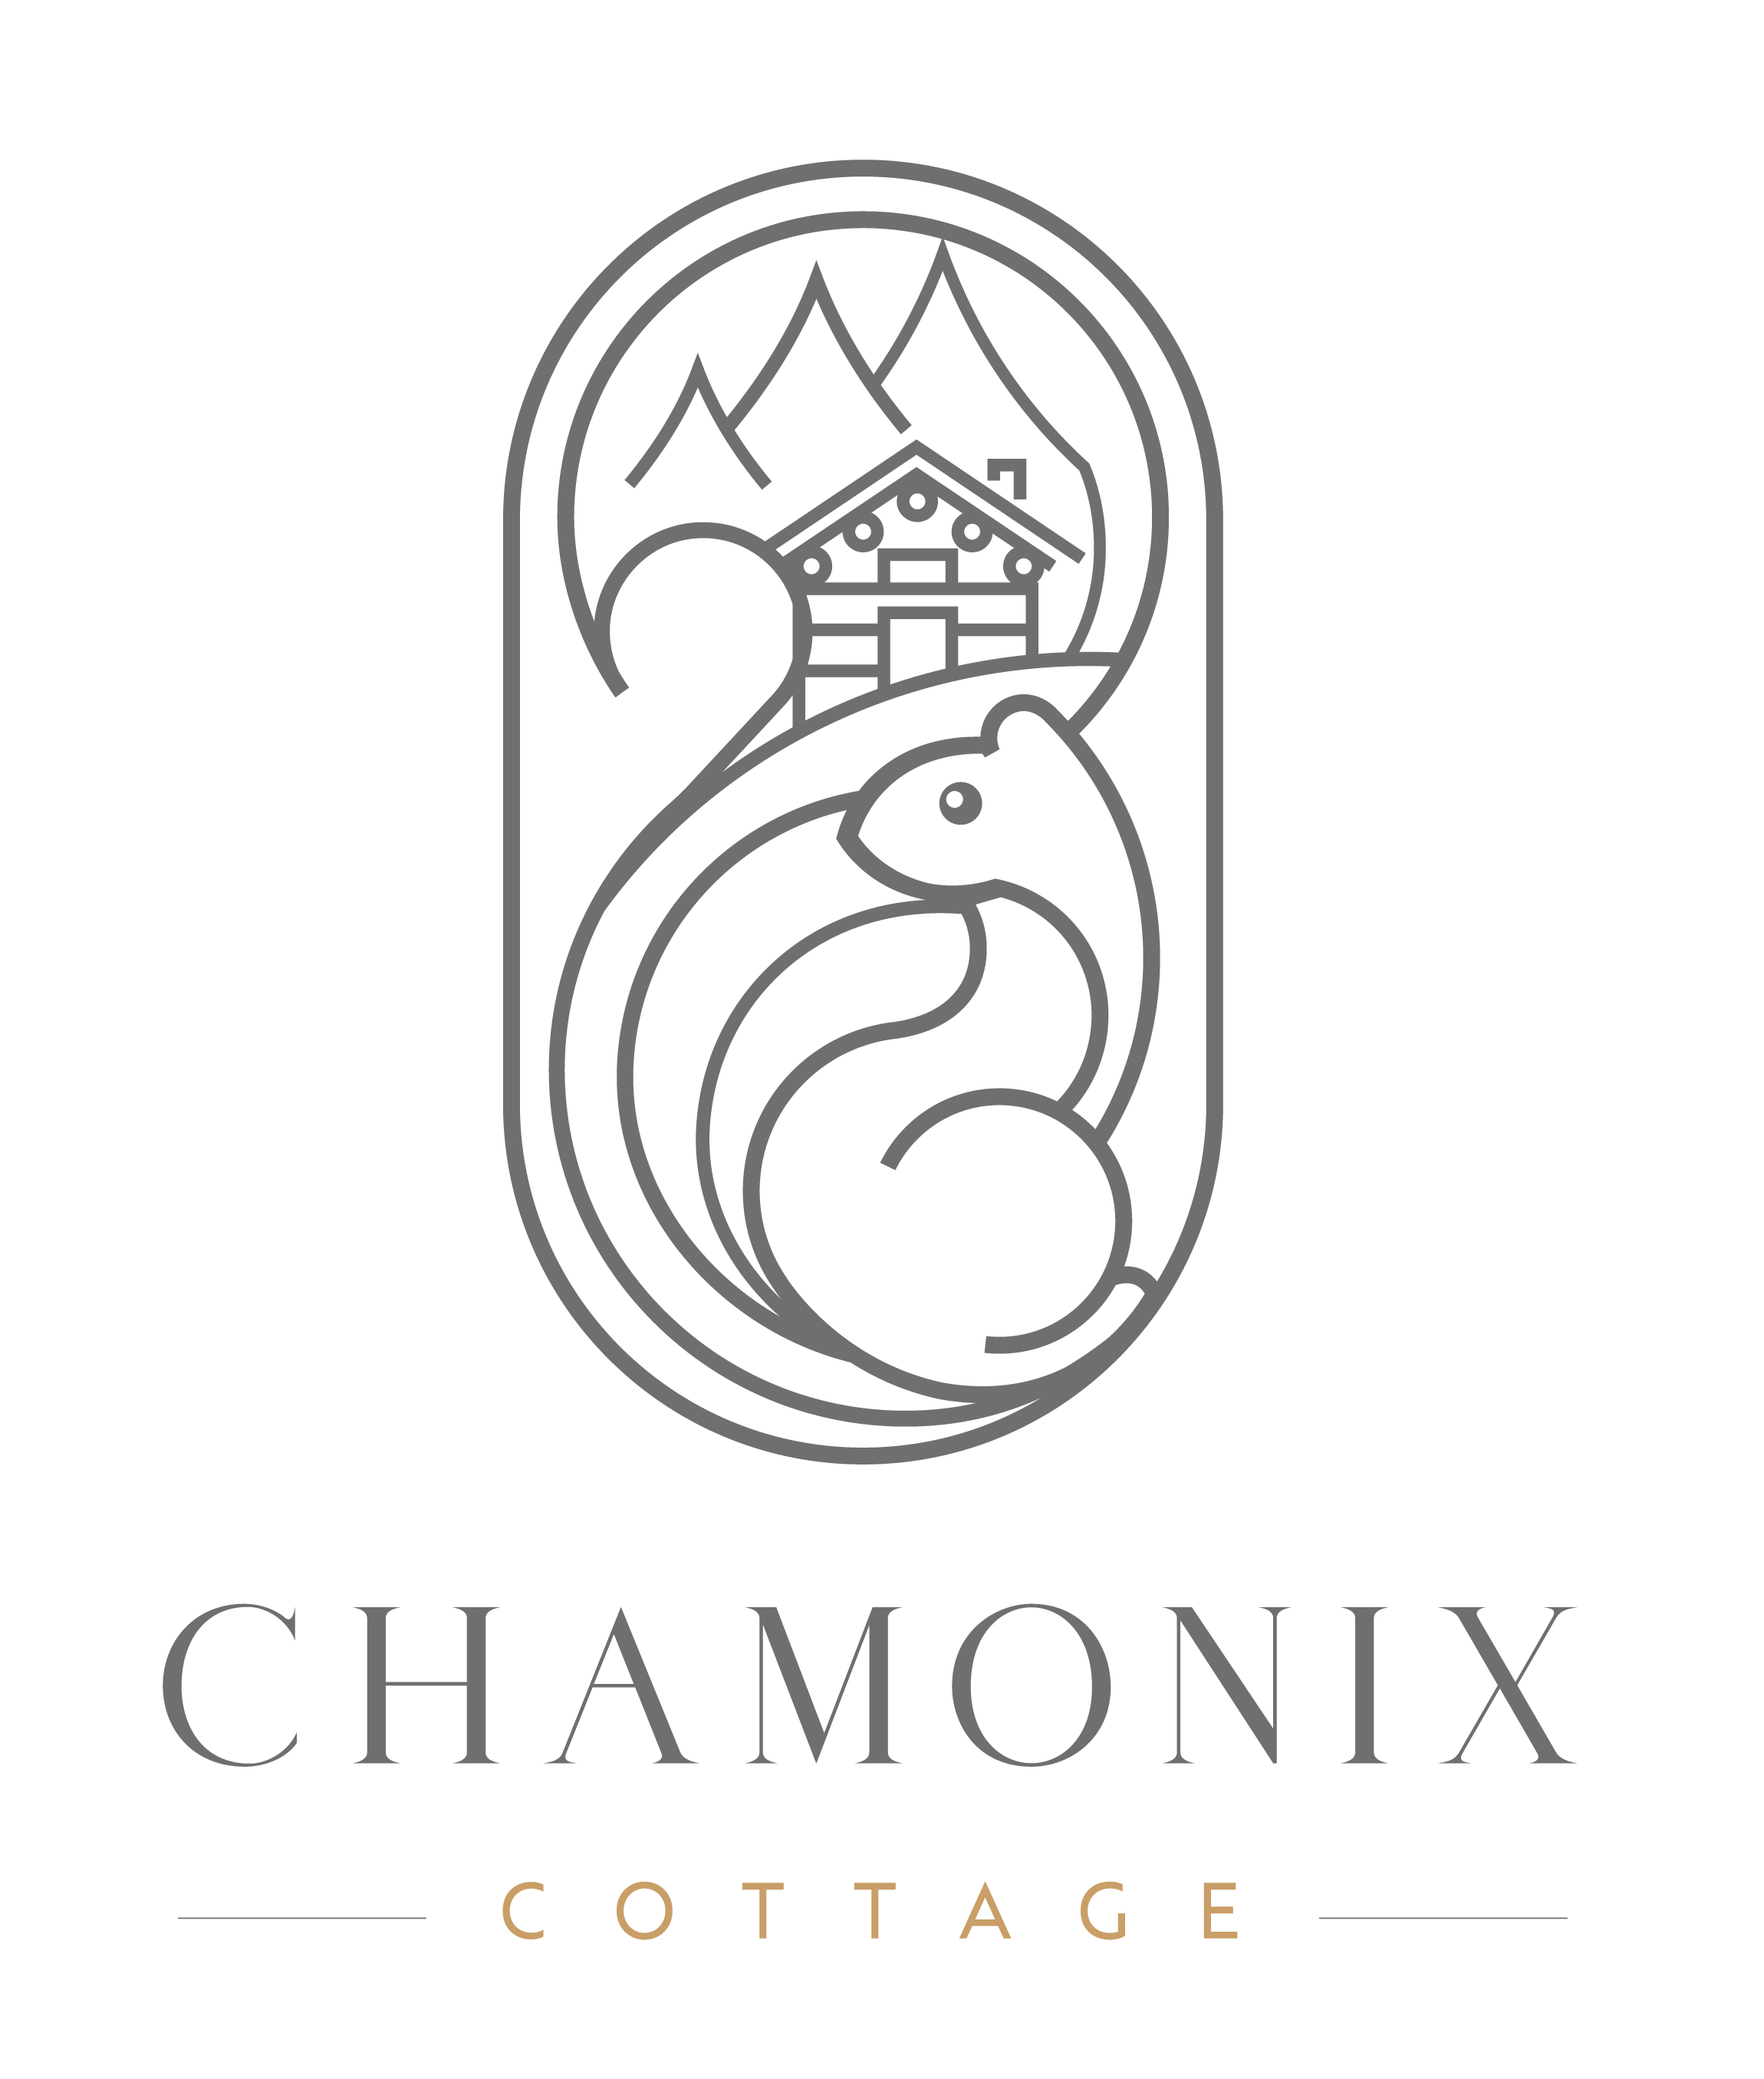 Chamonix Cottage | Privacy policy - Chamonix Cottage